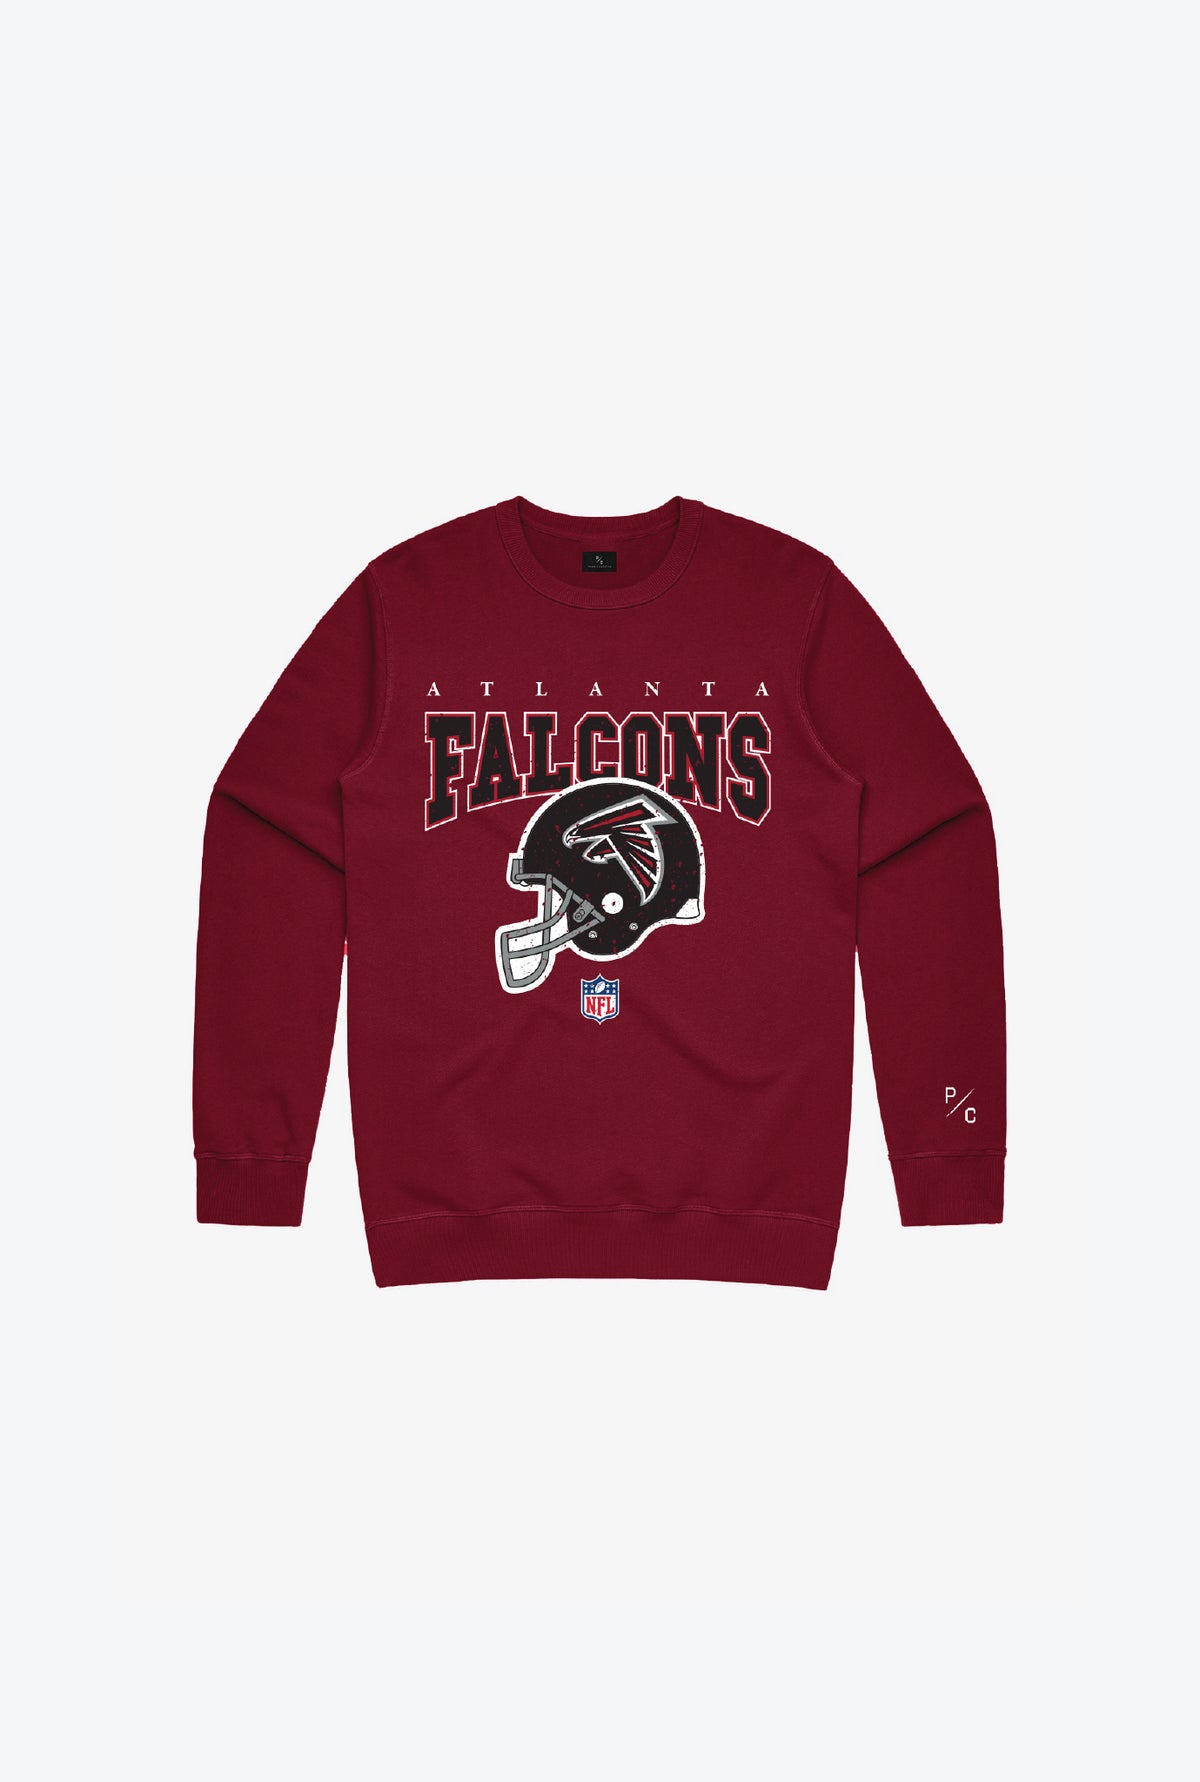 Atlanta Falcons Vintage Kids Crewneck - Maroon